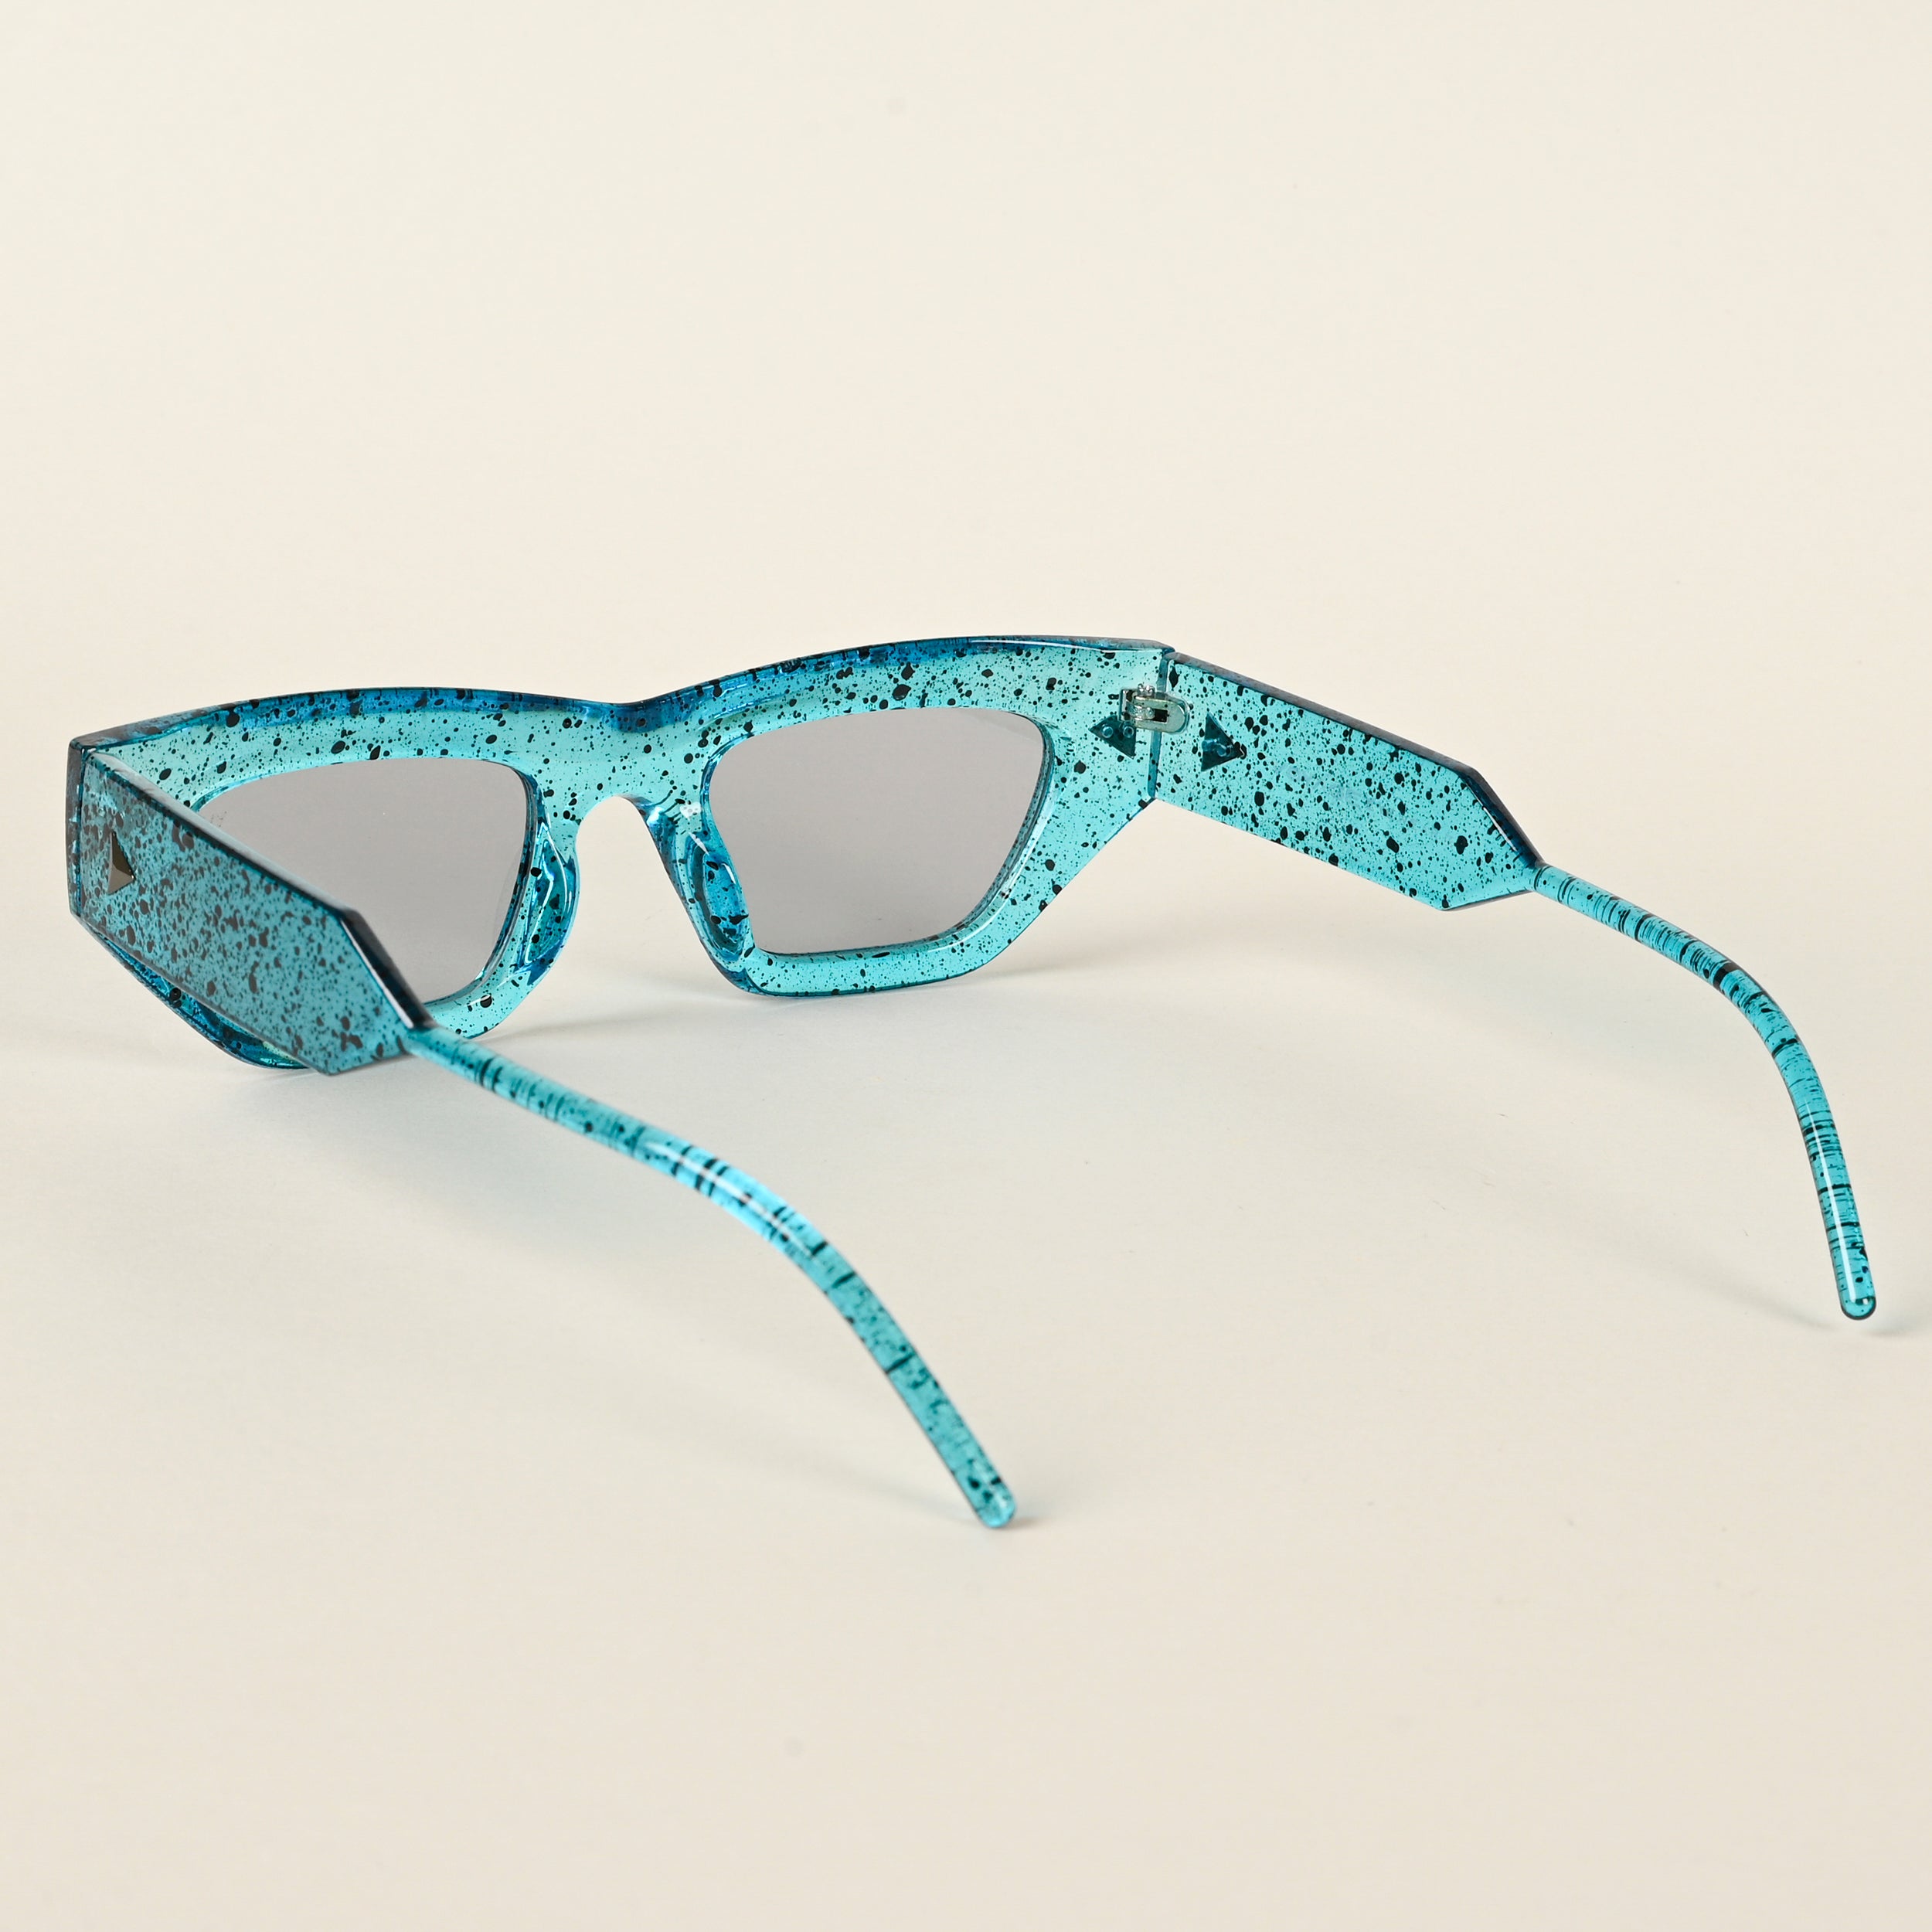 Voyage Grey Cateye Sunglasses for Women - MG4504